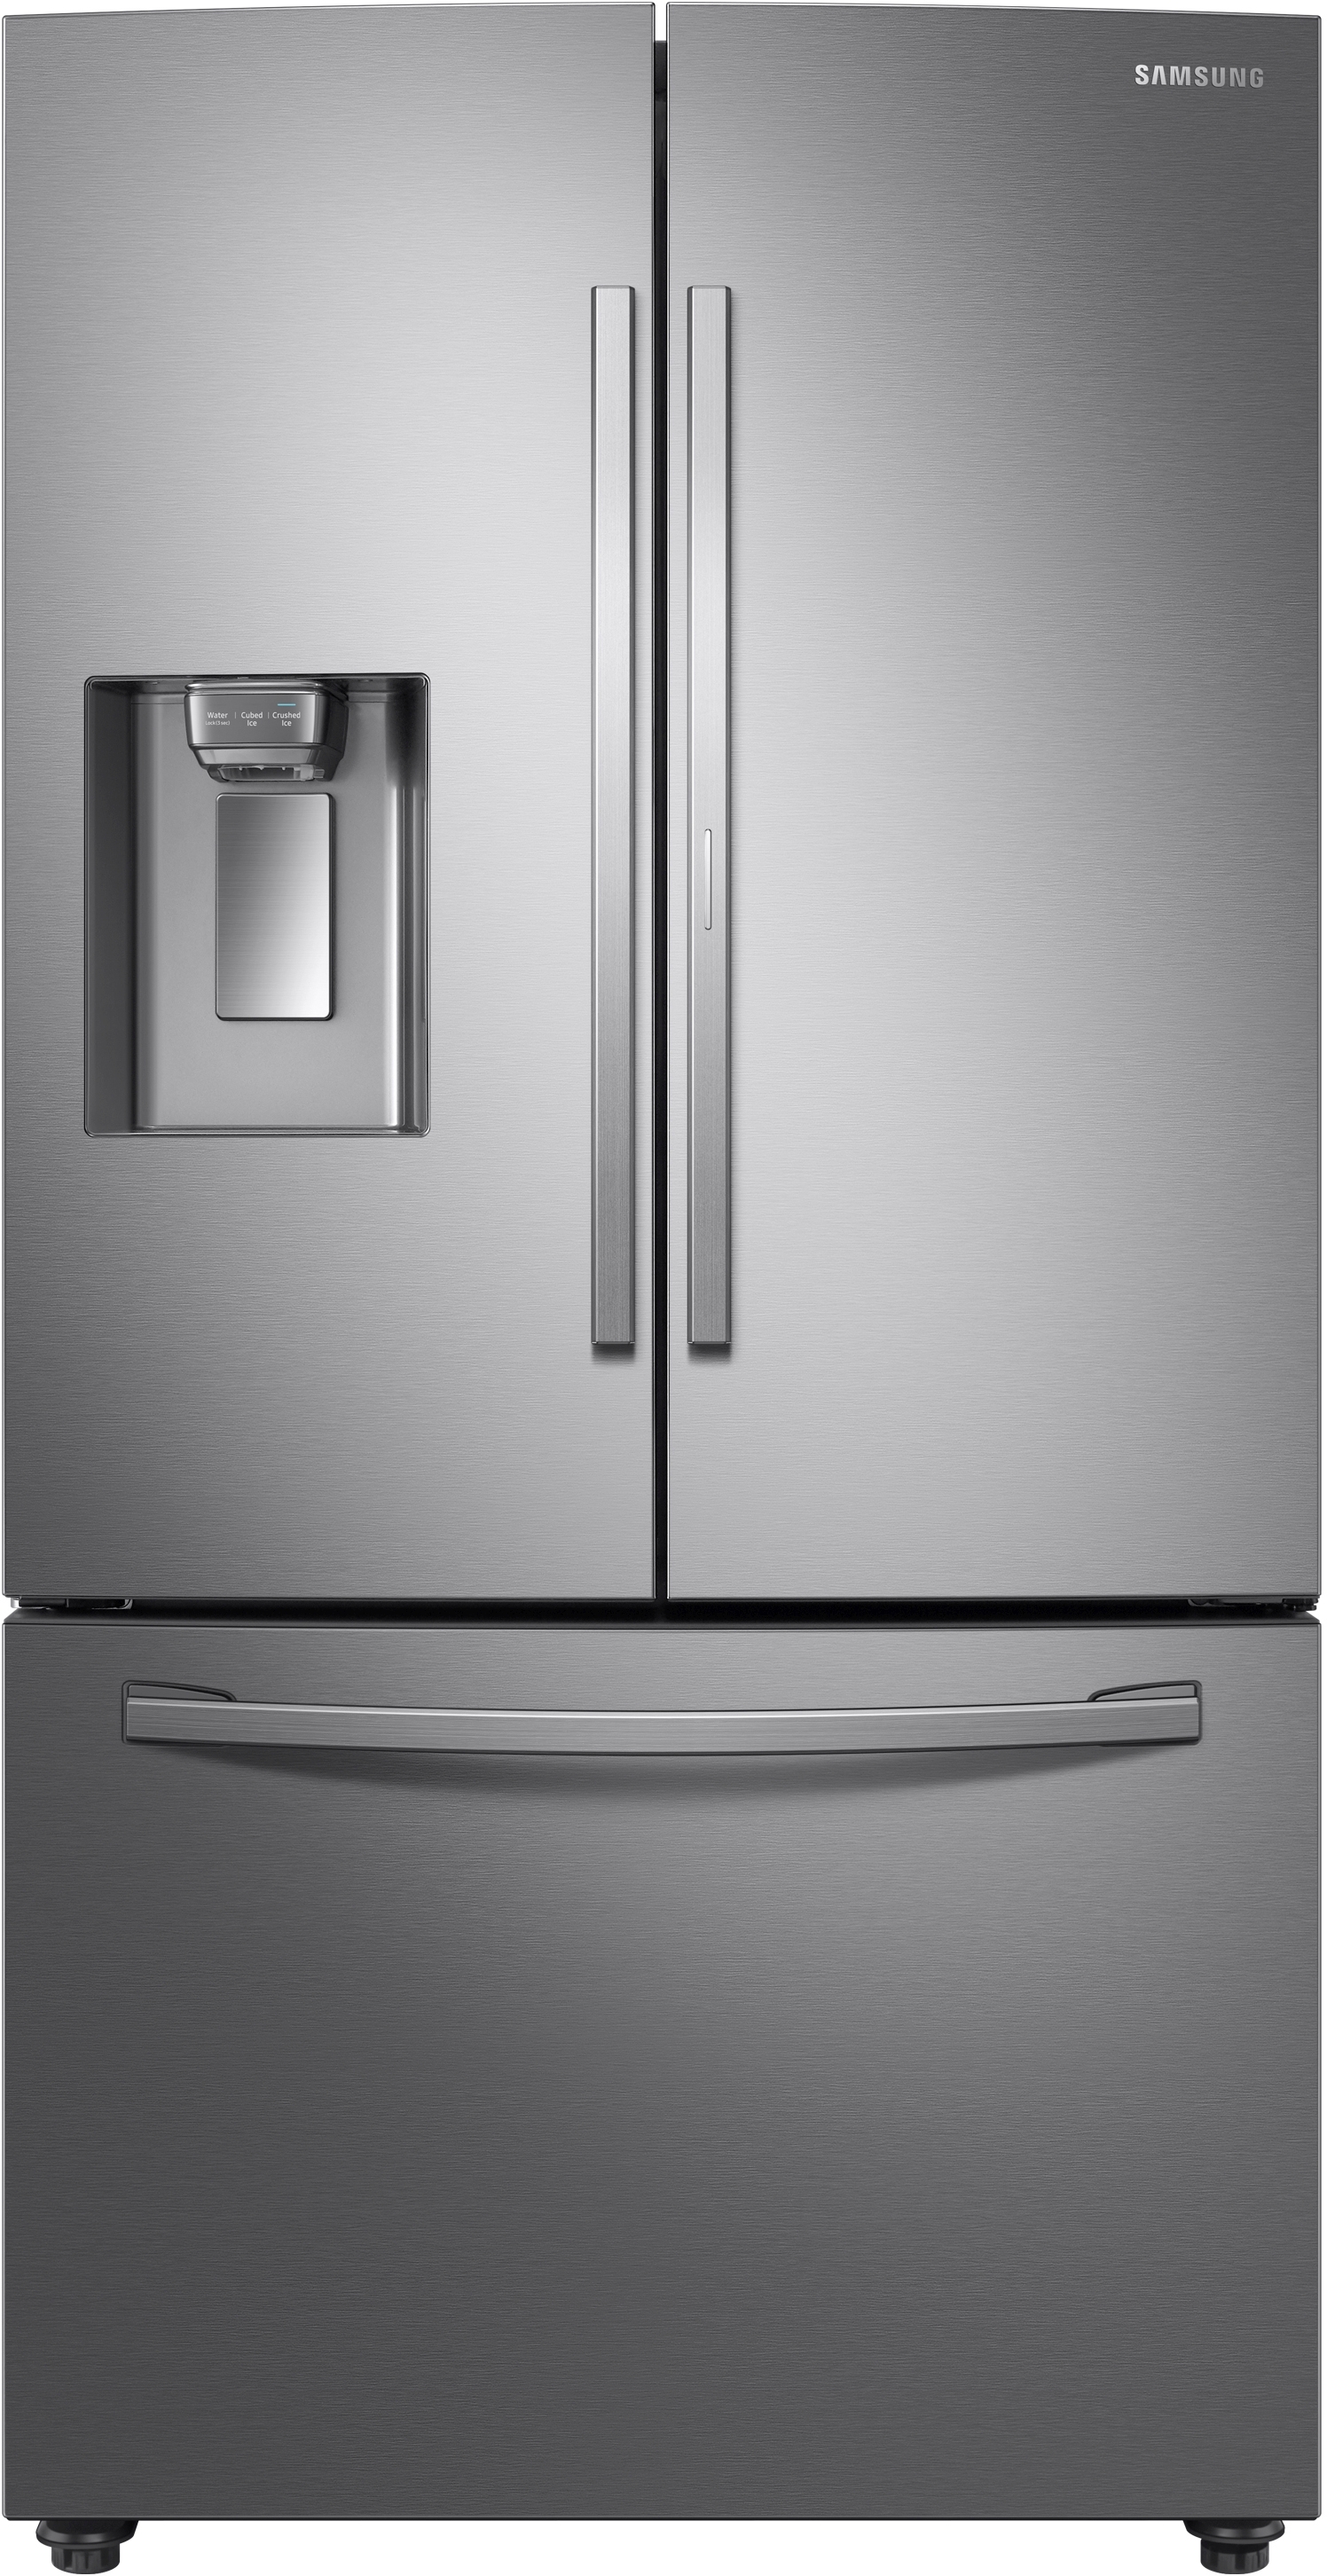 Samsung 22.5 Cu. Ft. Fingerprint Resistant Stainless Steel Counter Depth French Door Refrigerator